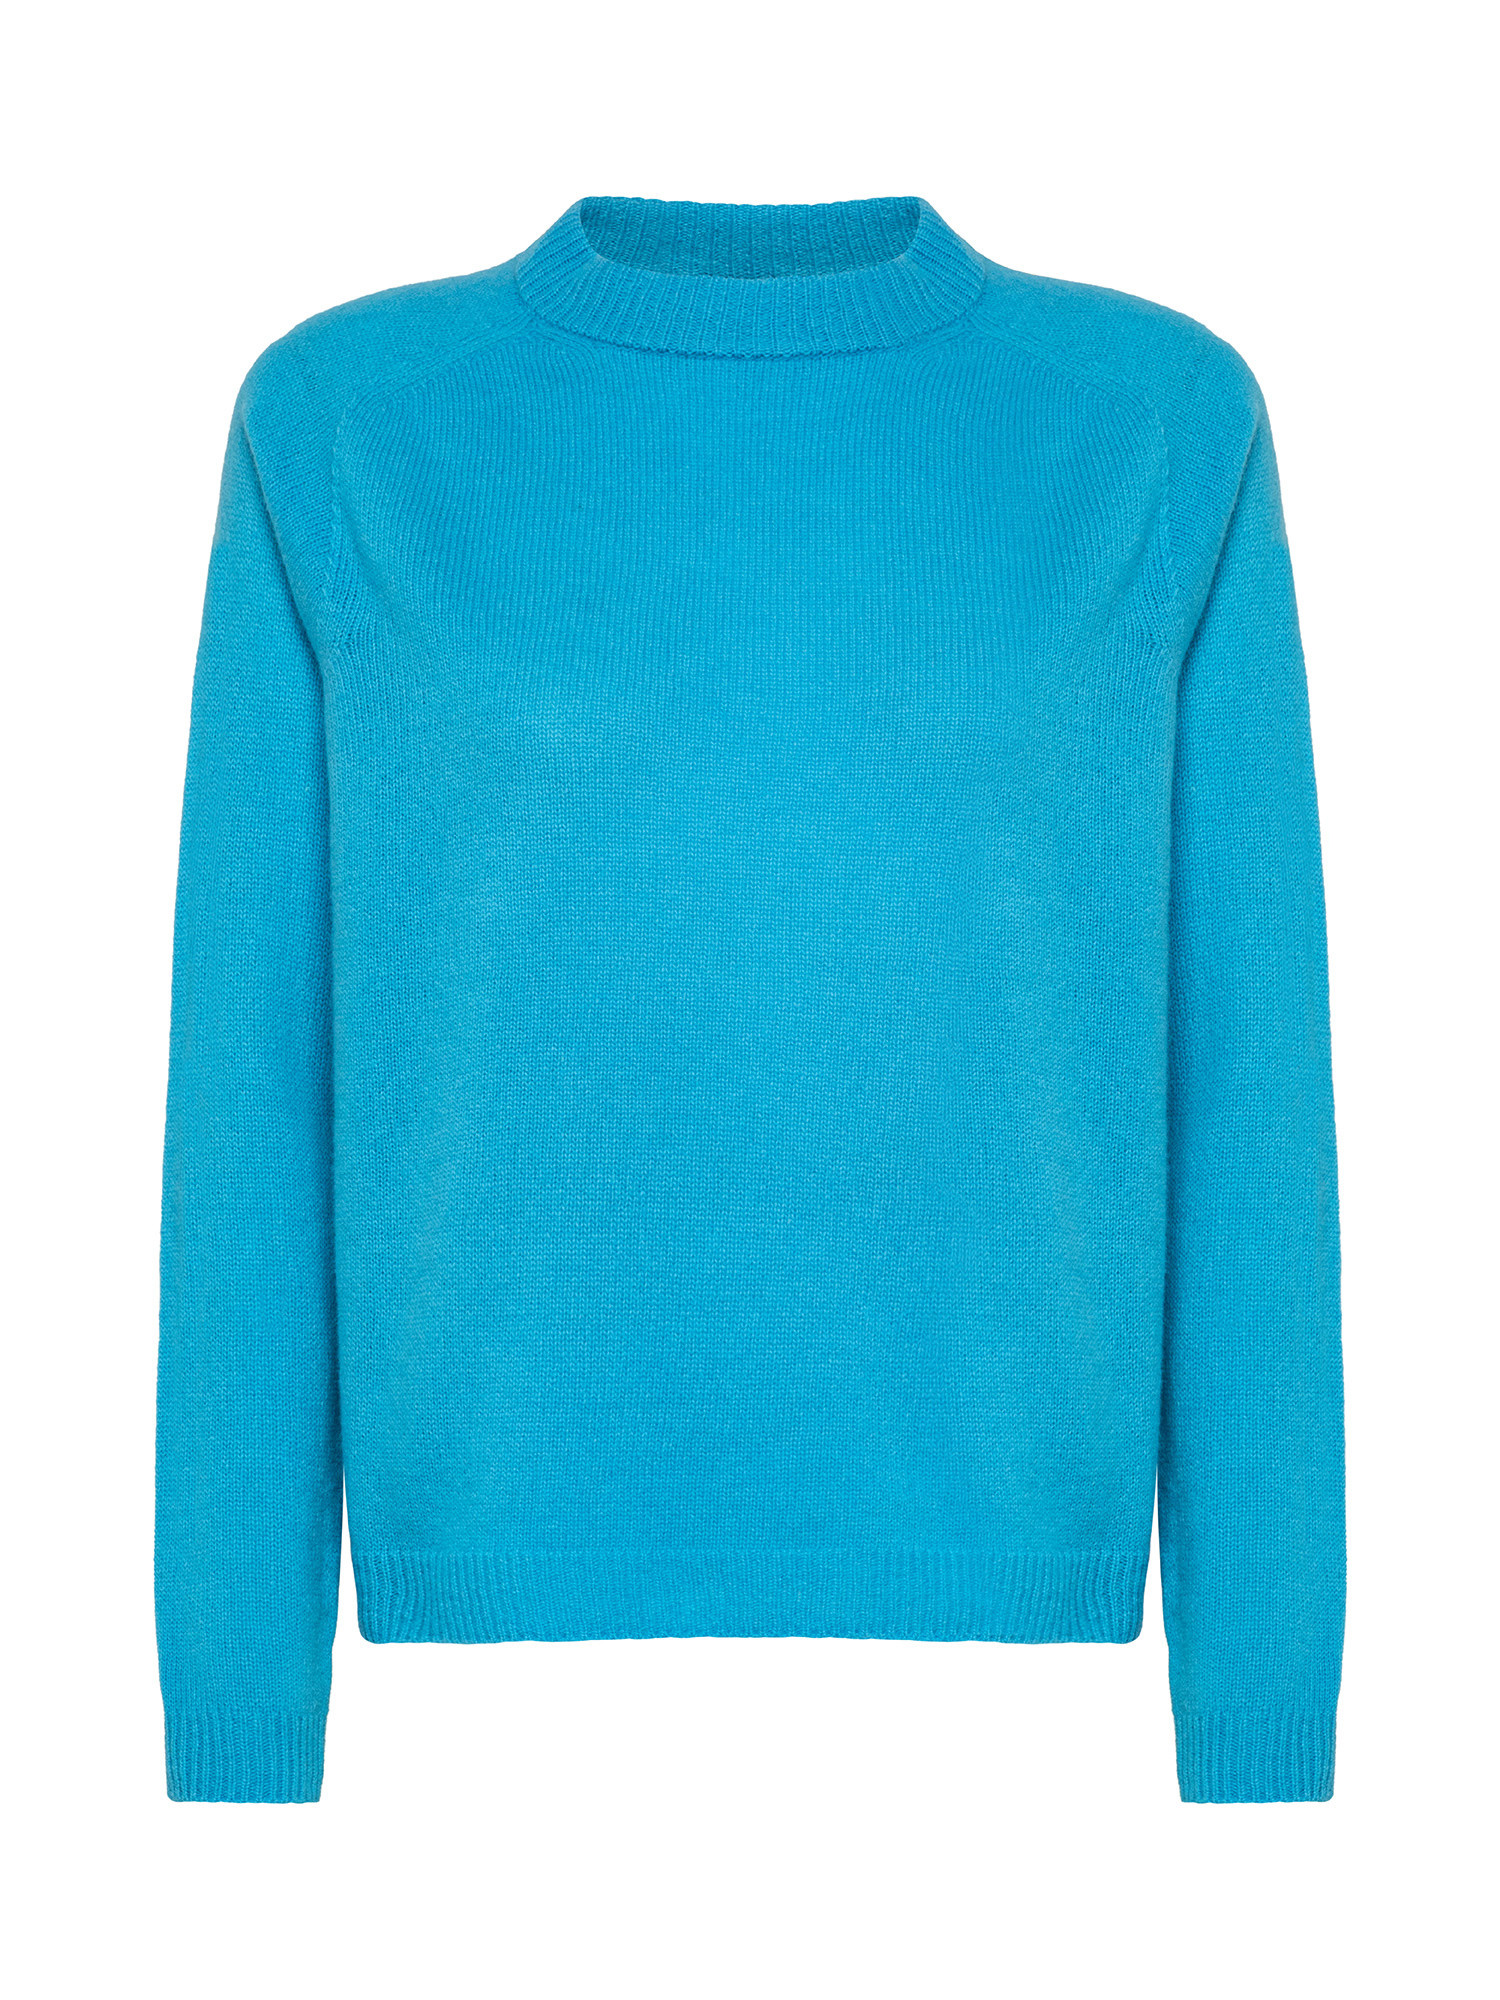 K Collection - Crewneck sweater, Light Blue, large image number 0